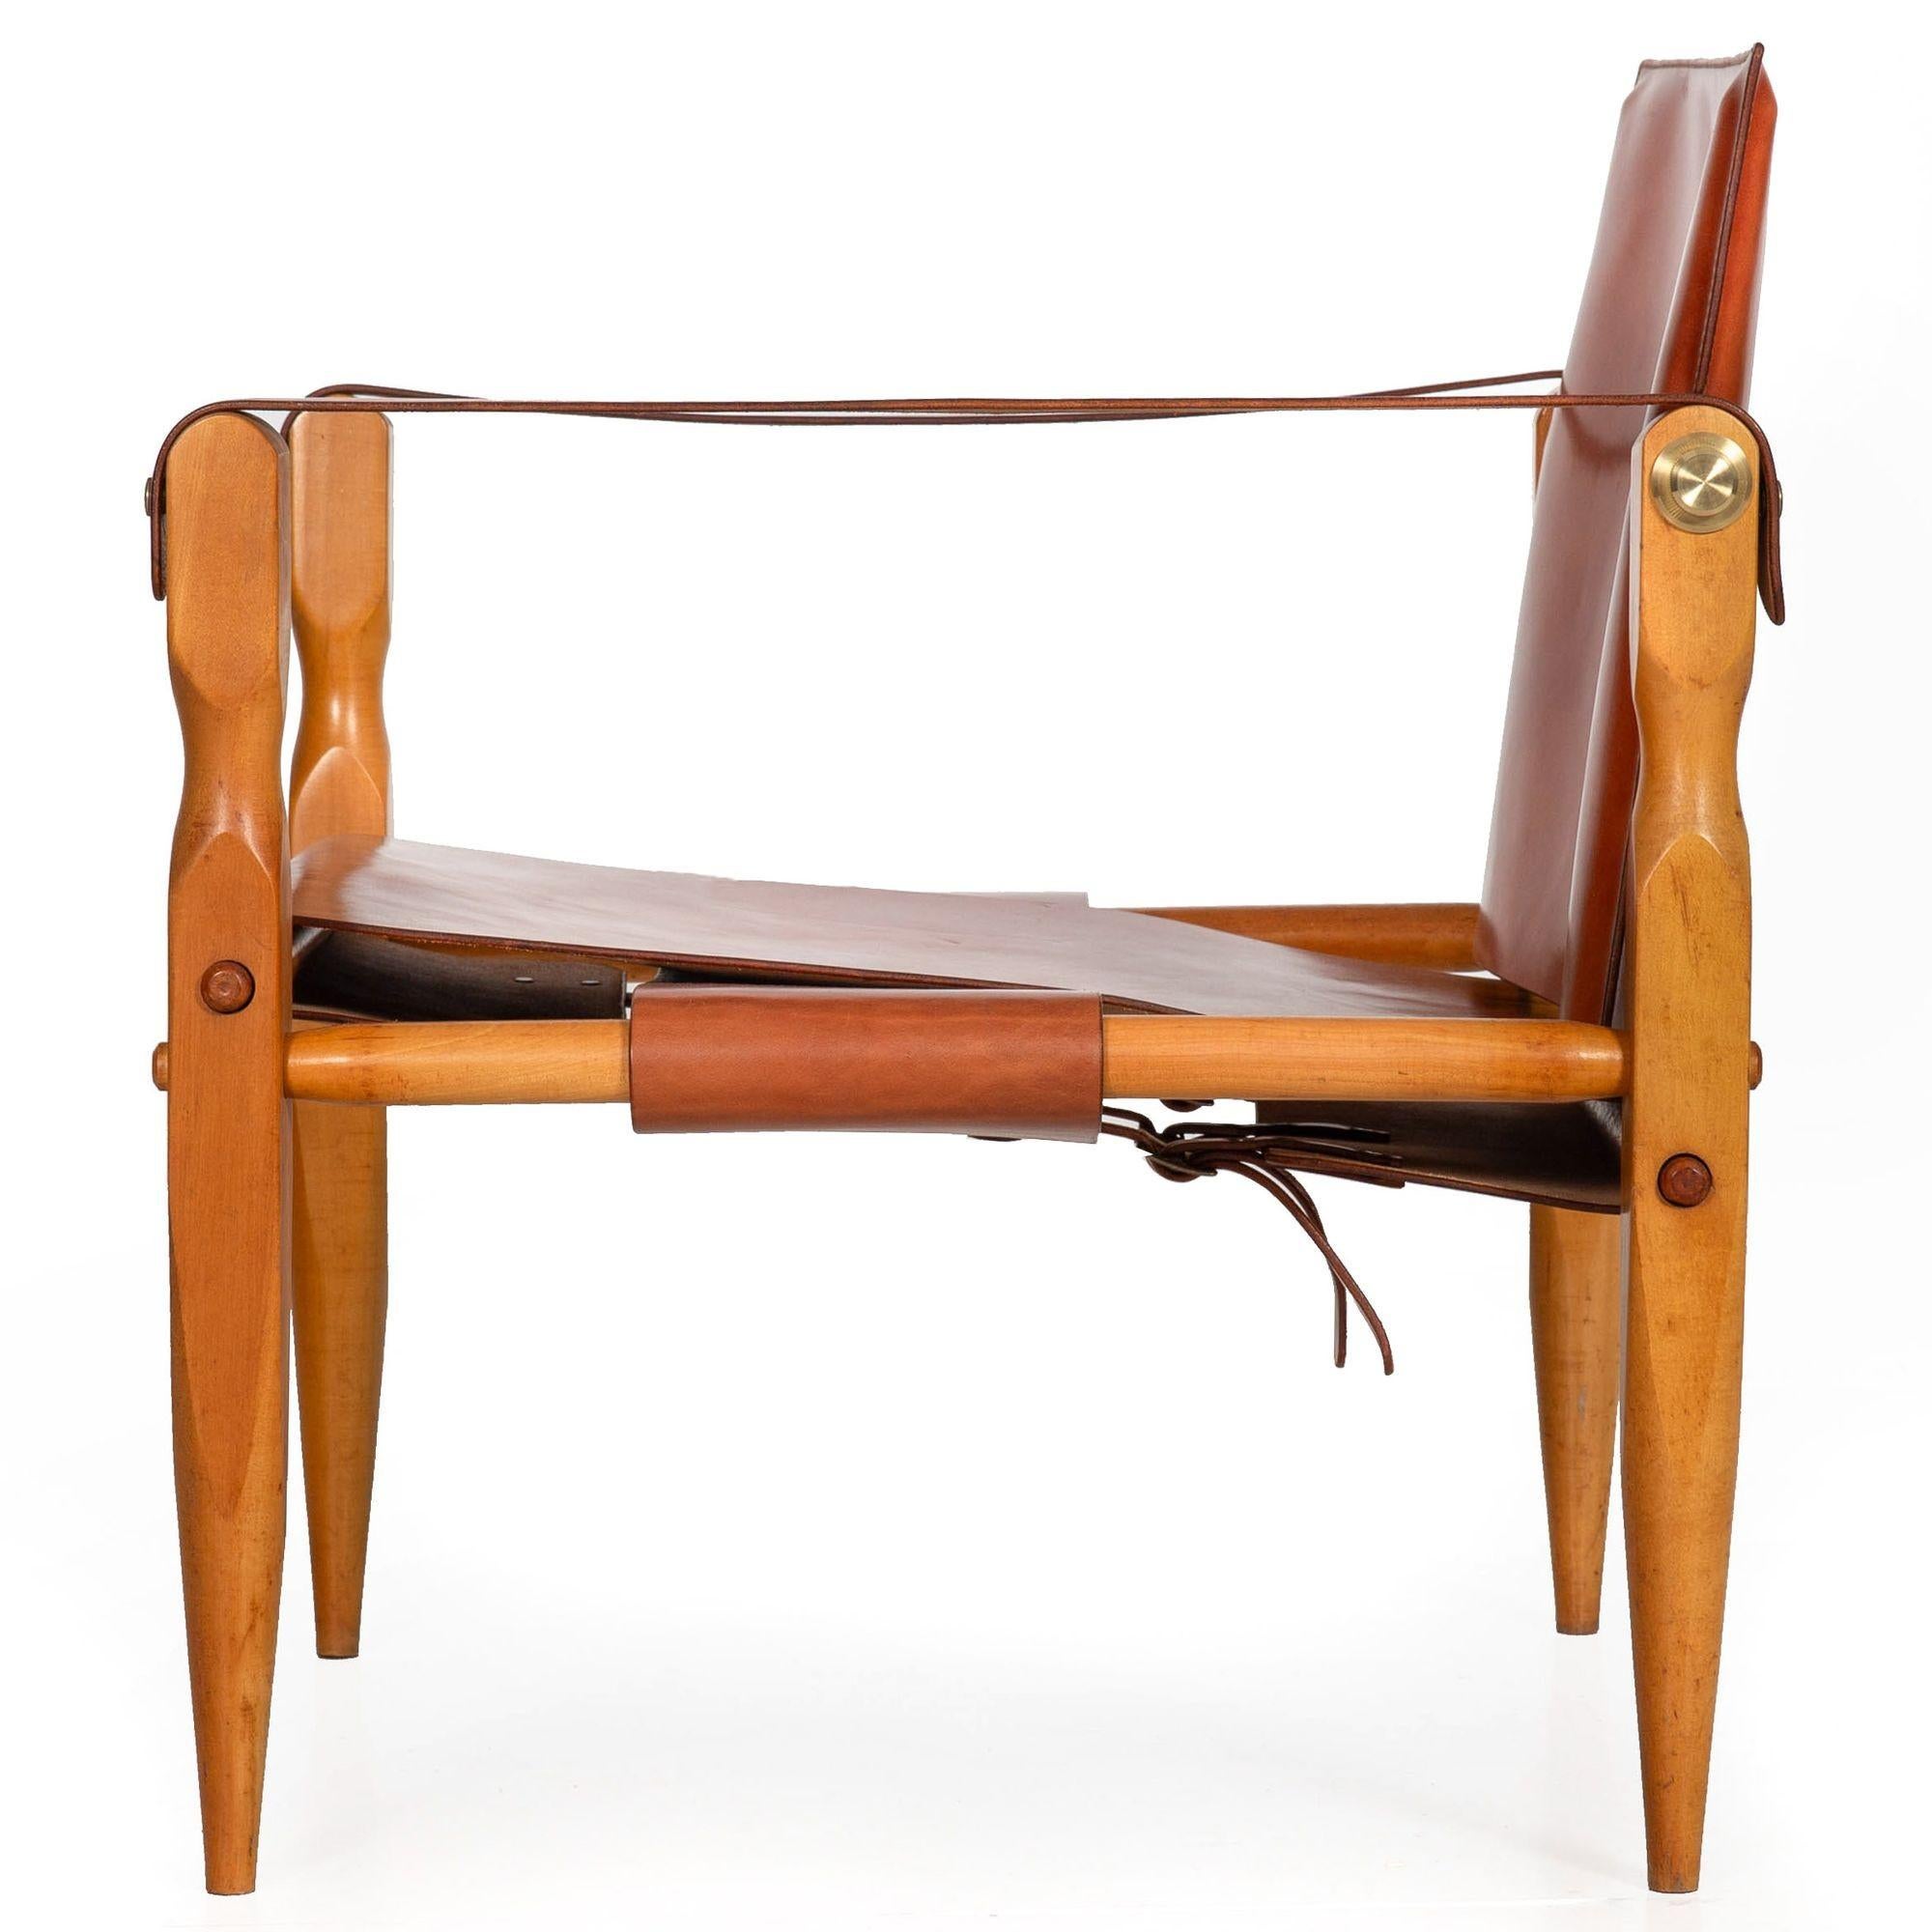 20th Century Gorgeous Circa 1970s Mid-Century Modern “Safari” Chair in New Leather